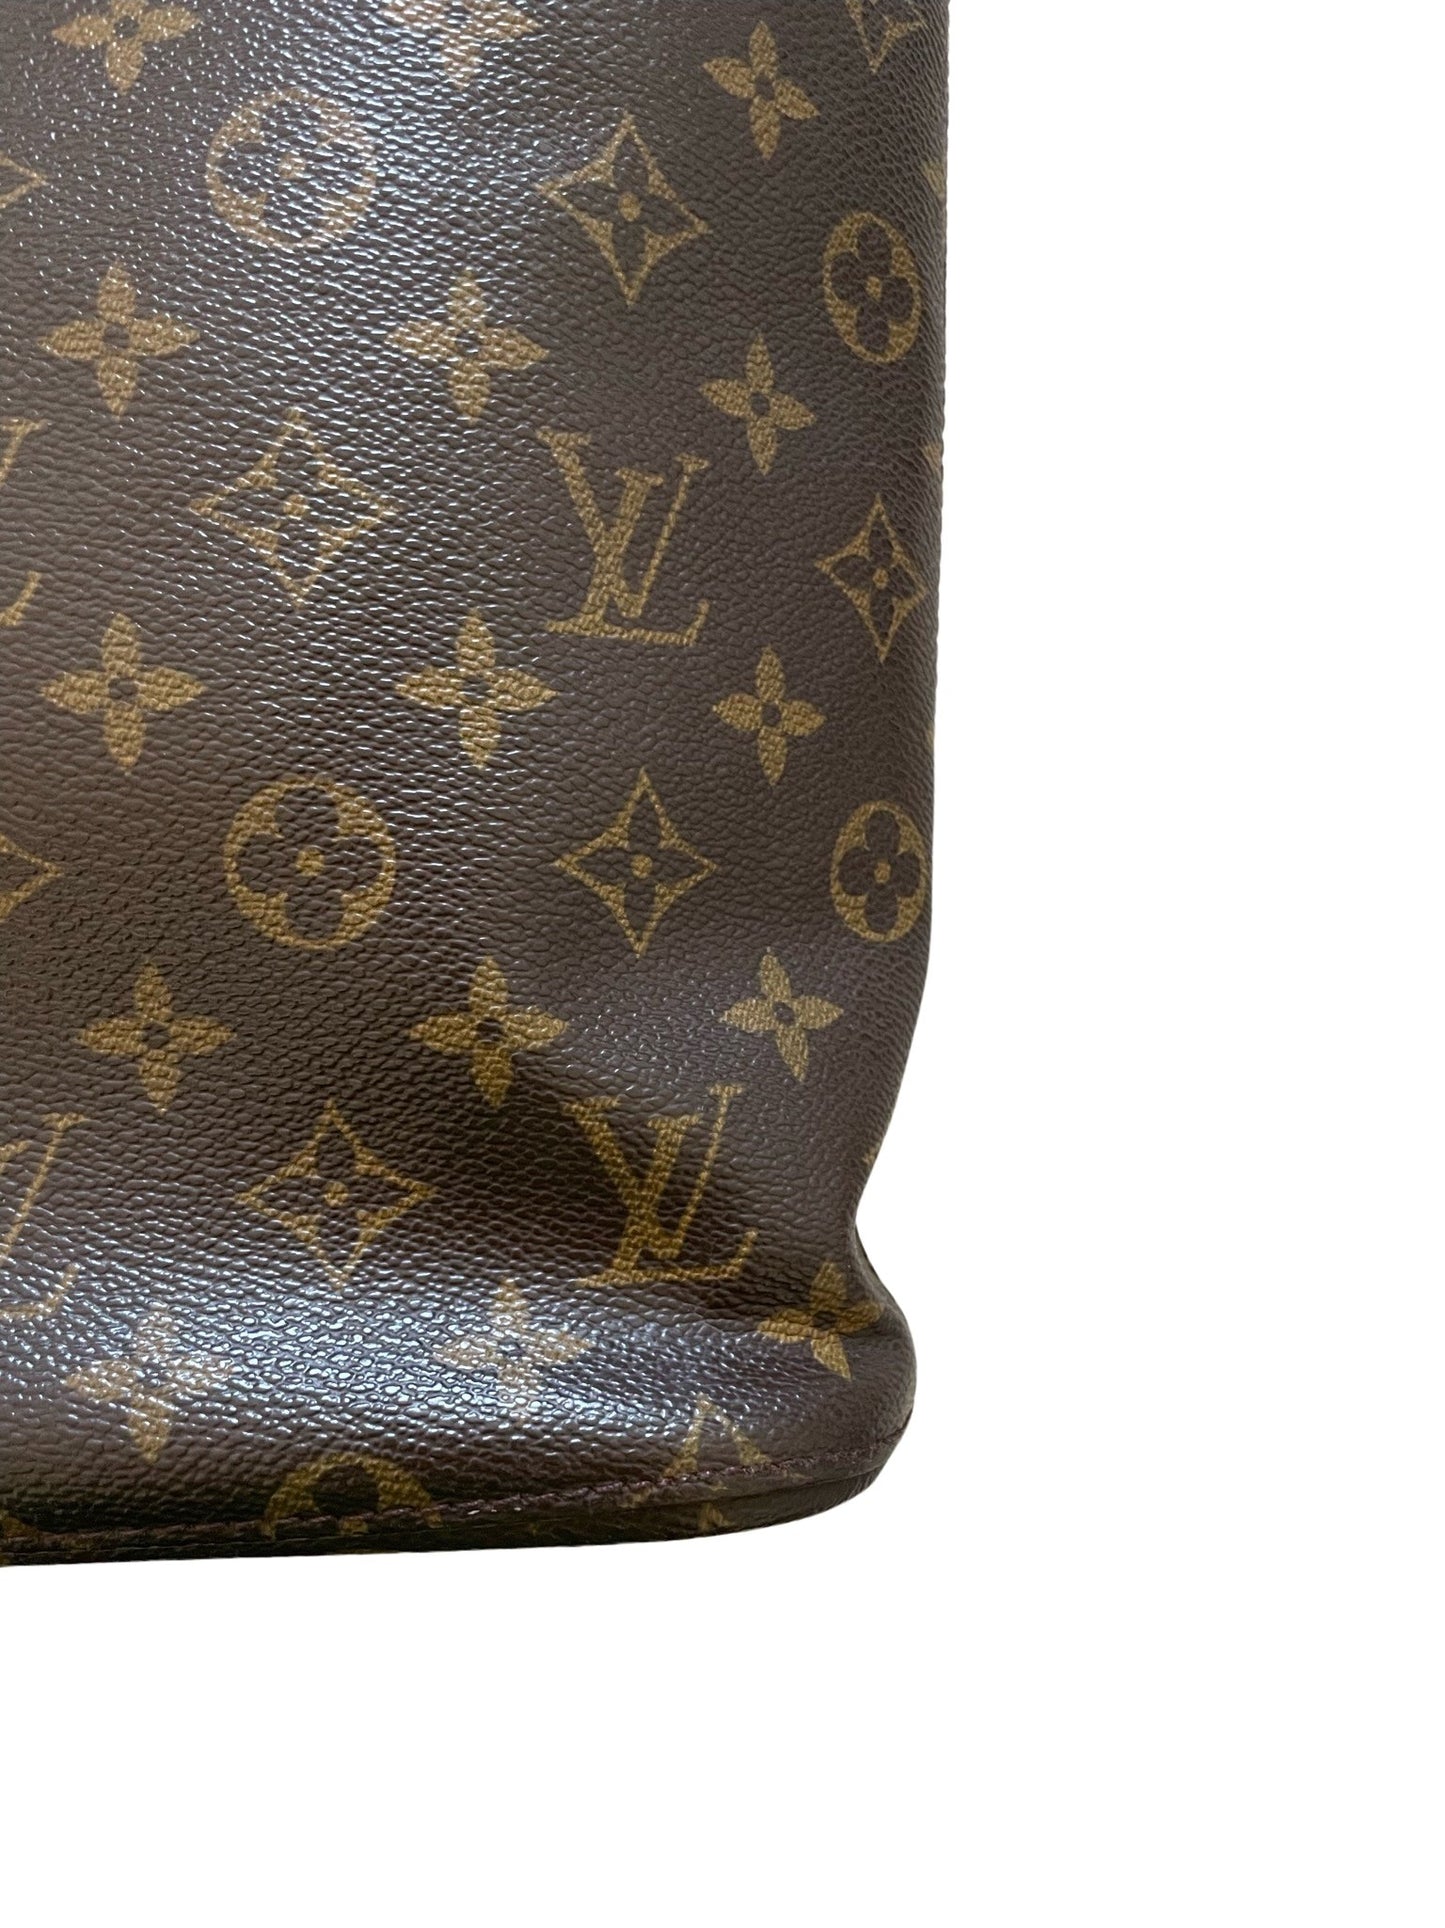 Louis Vuitton Vavin GM Monogram Tote Bag